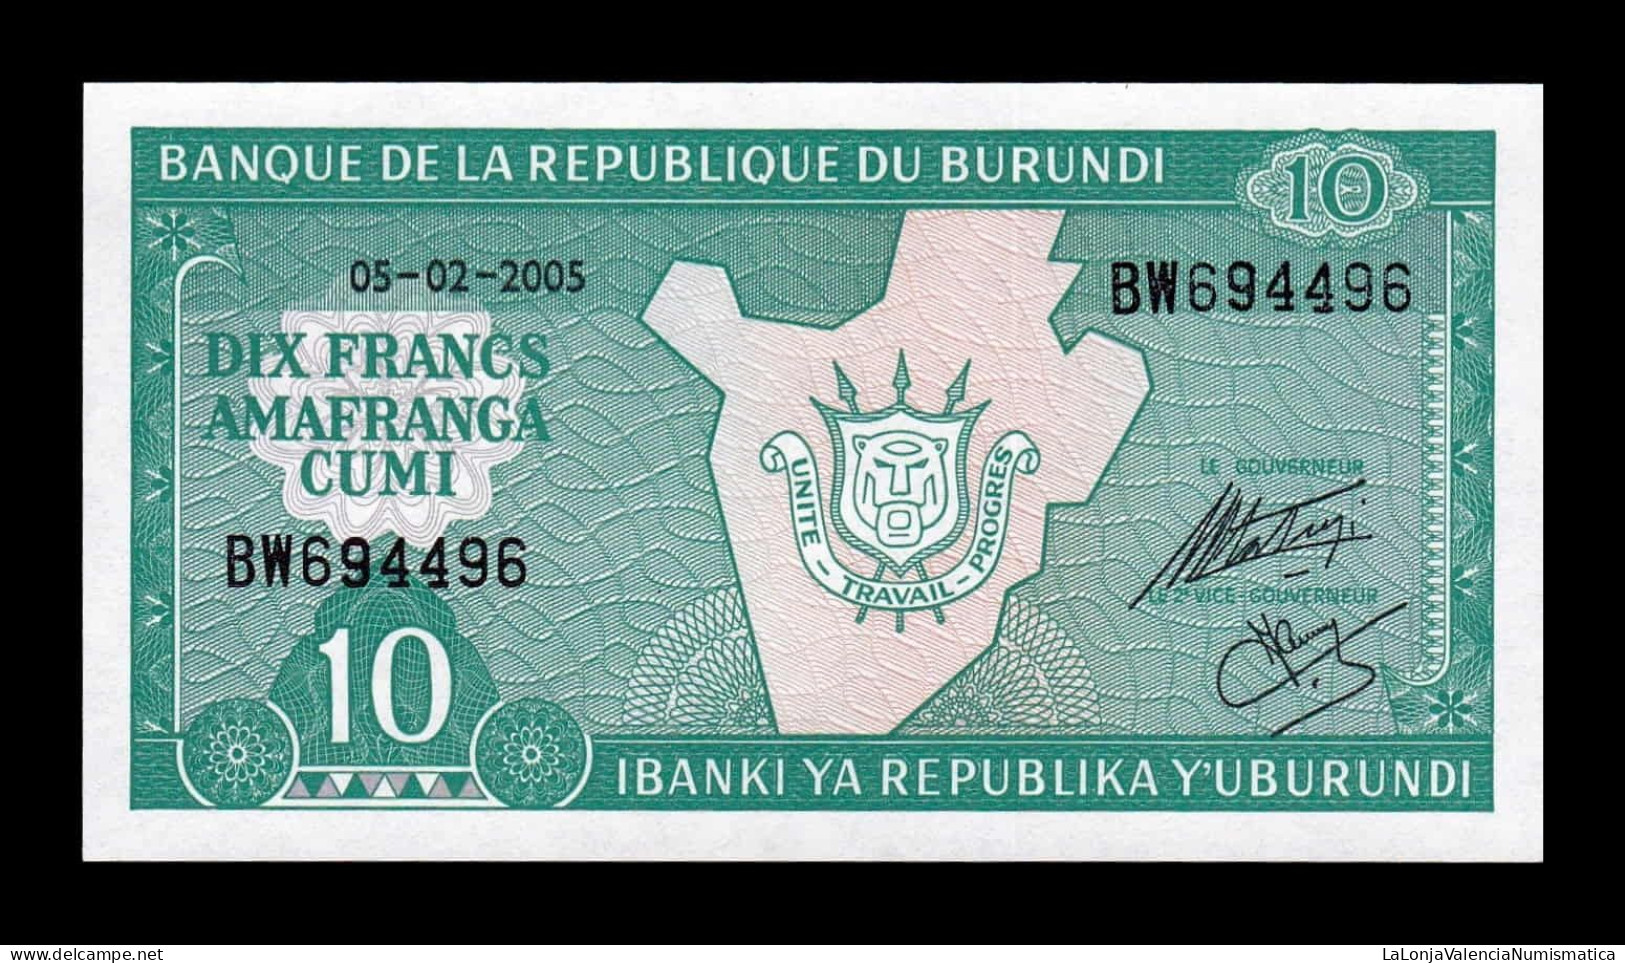 Burundi 10 Francs 2005 Pick 33e Capicua Radar Sc Unc - Burundi